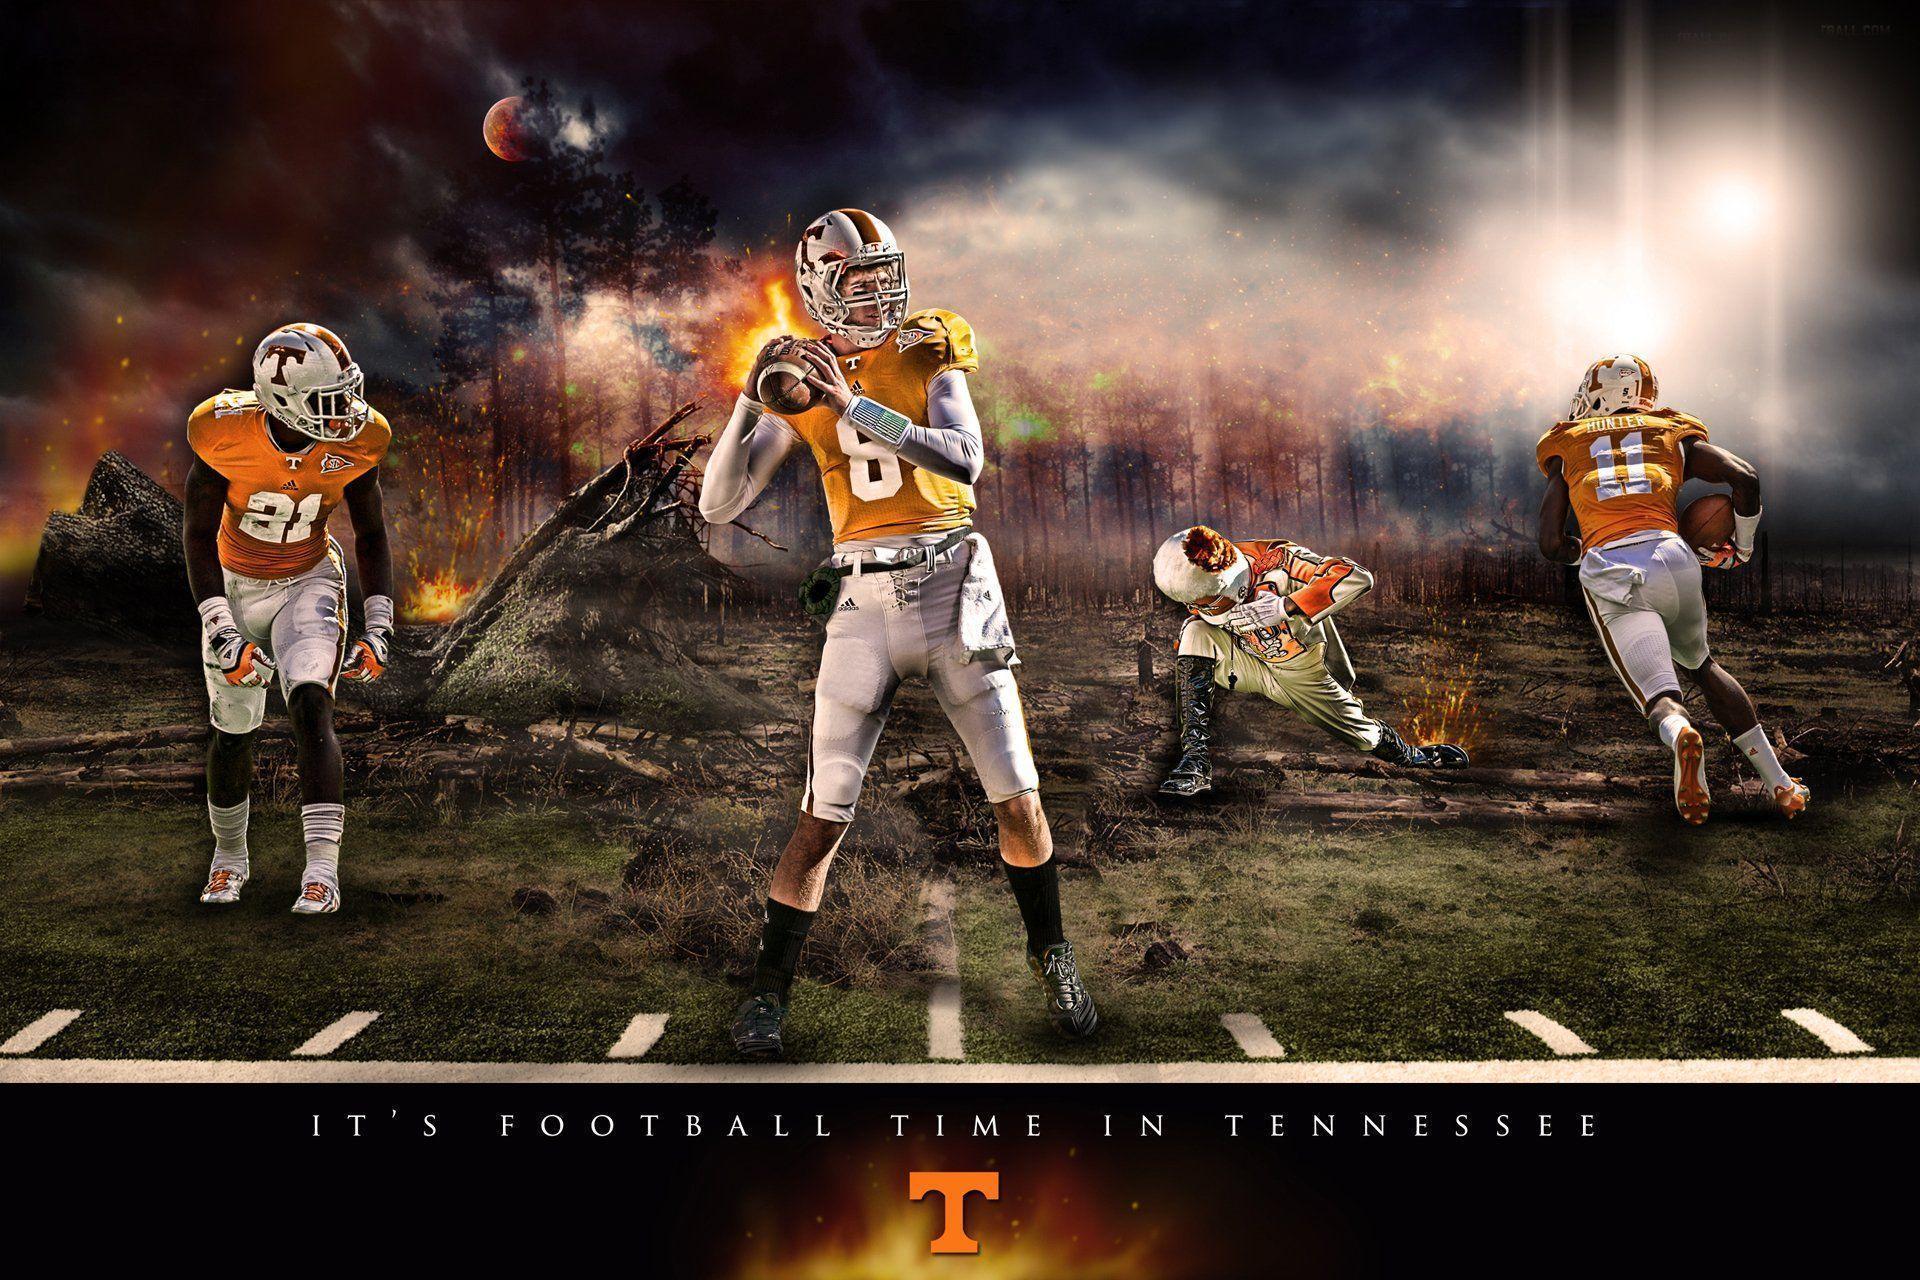 Tennessee Vols iPhone Wallpaper